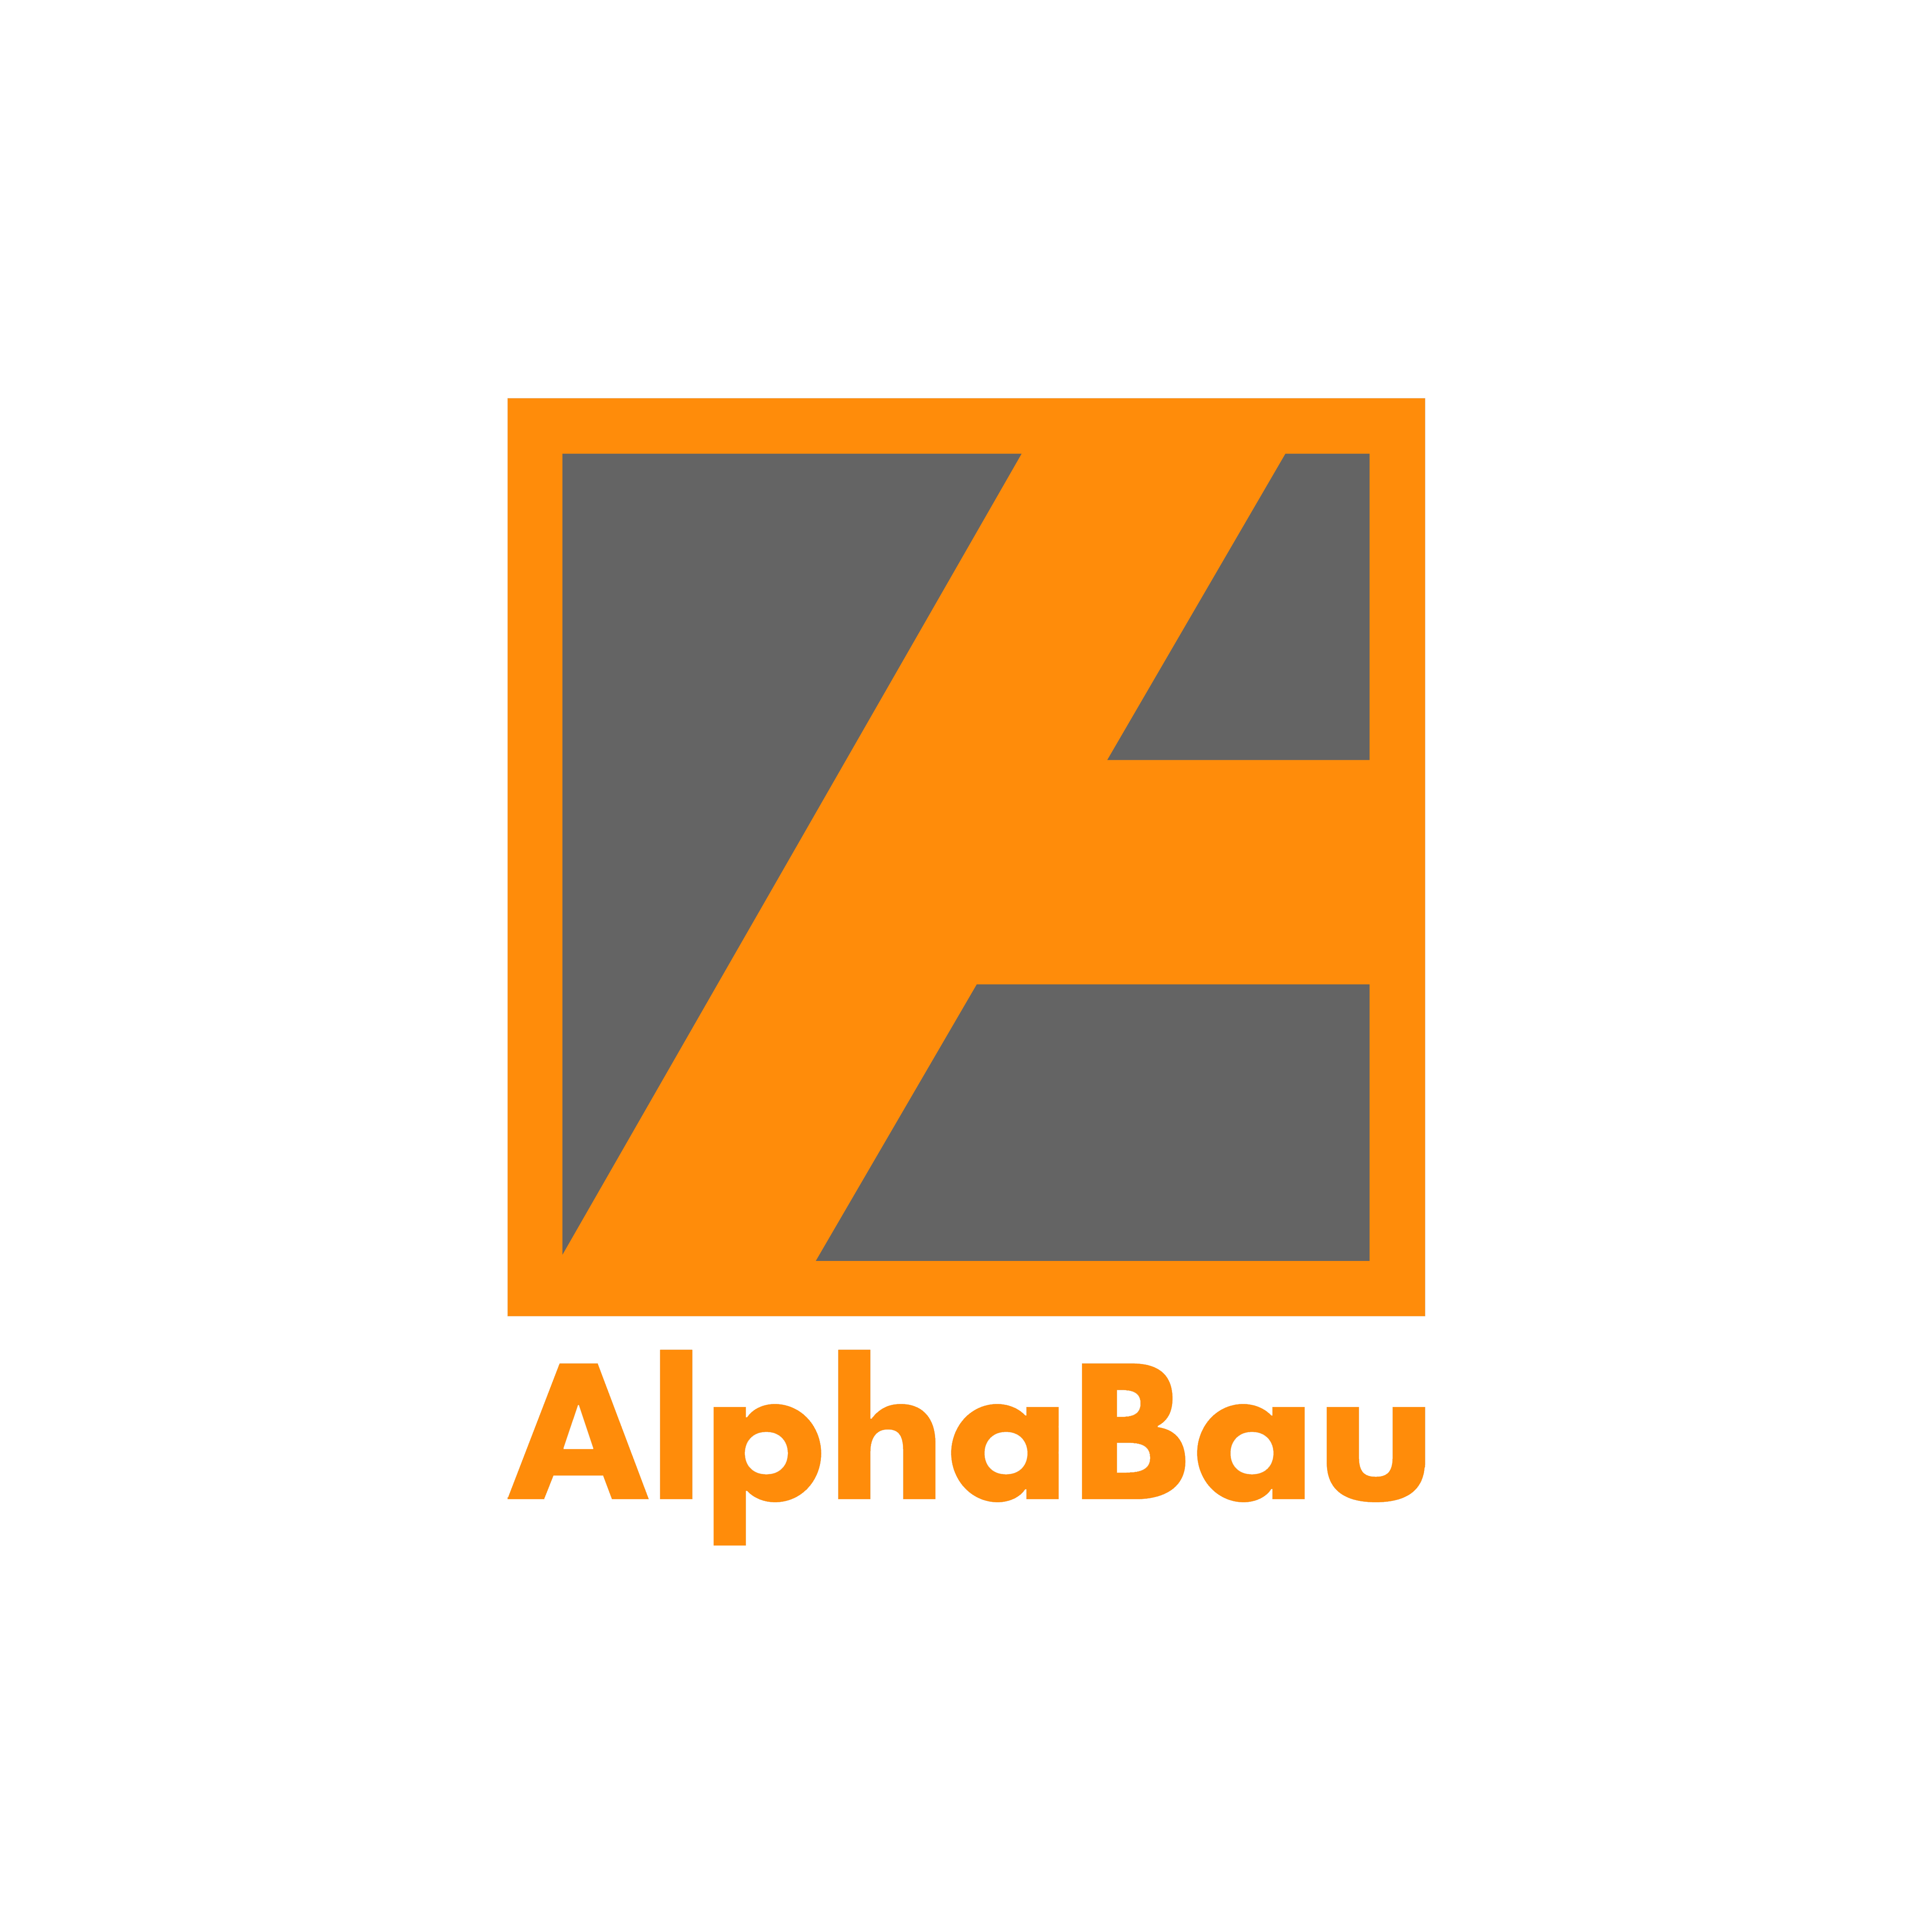 AlphaBau